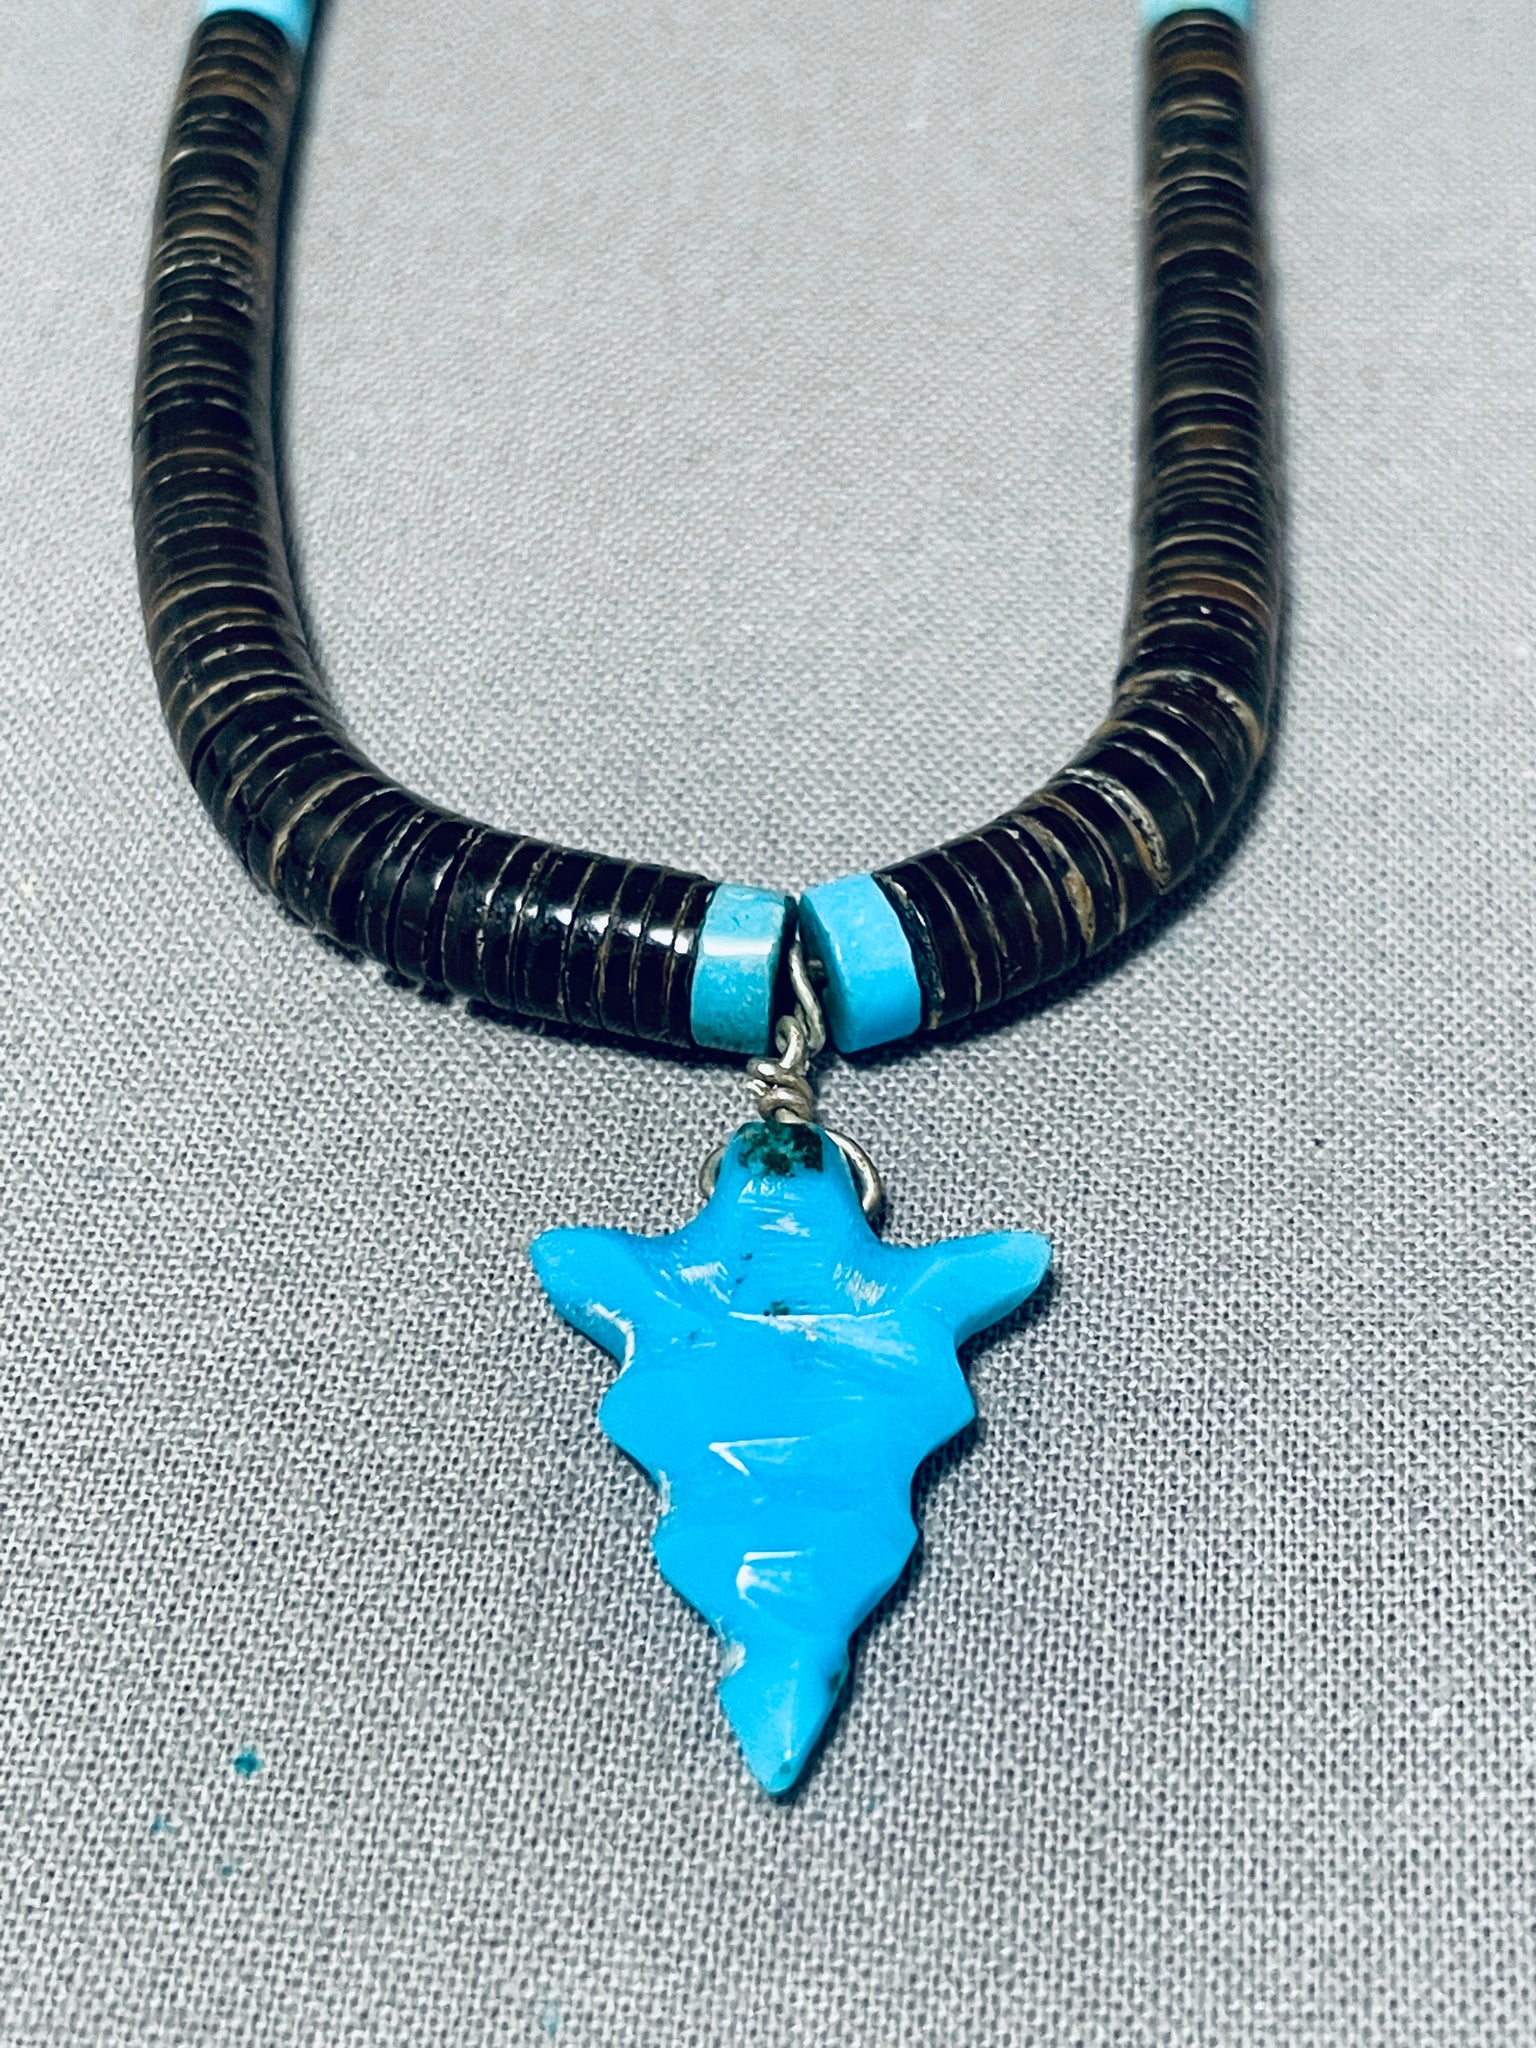 Black Obsidian Arrowhead Necklace – Glorious Healing Crystals